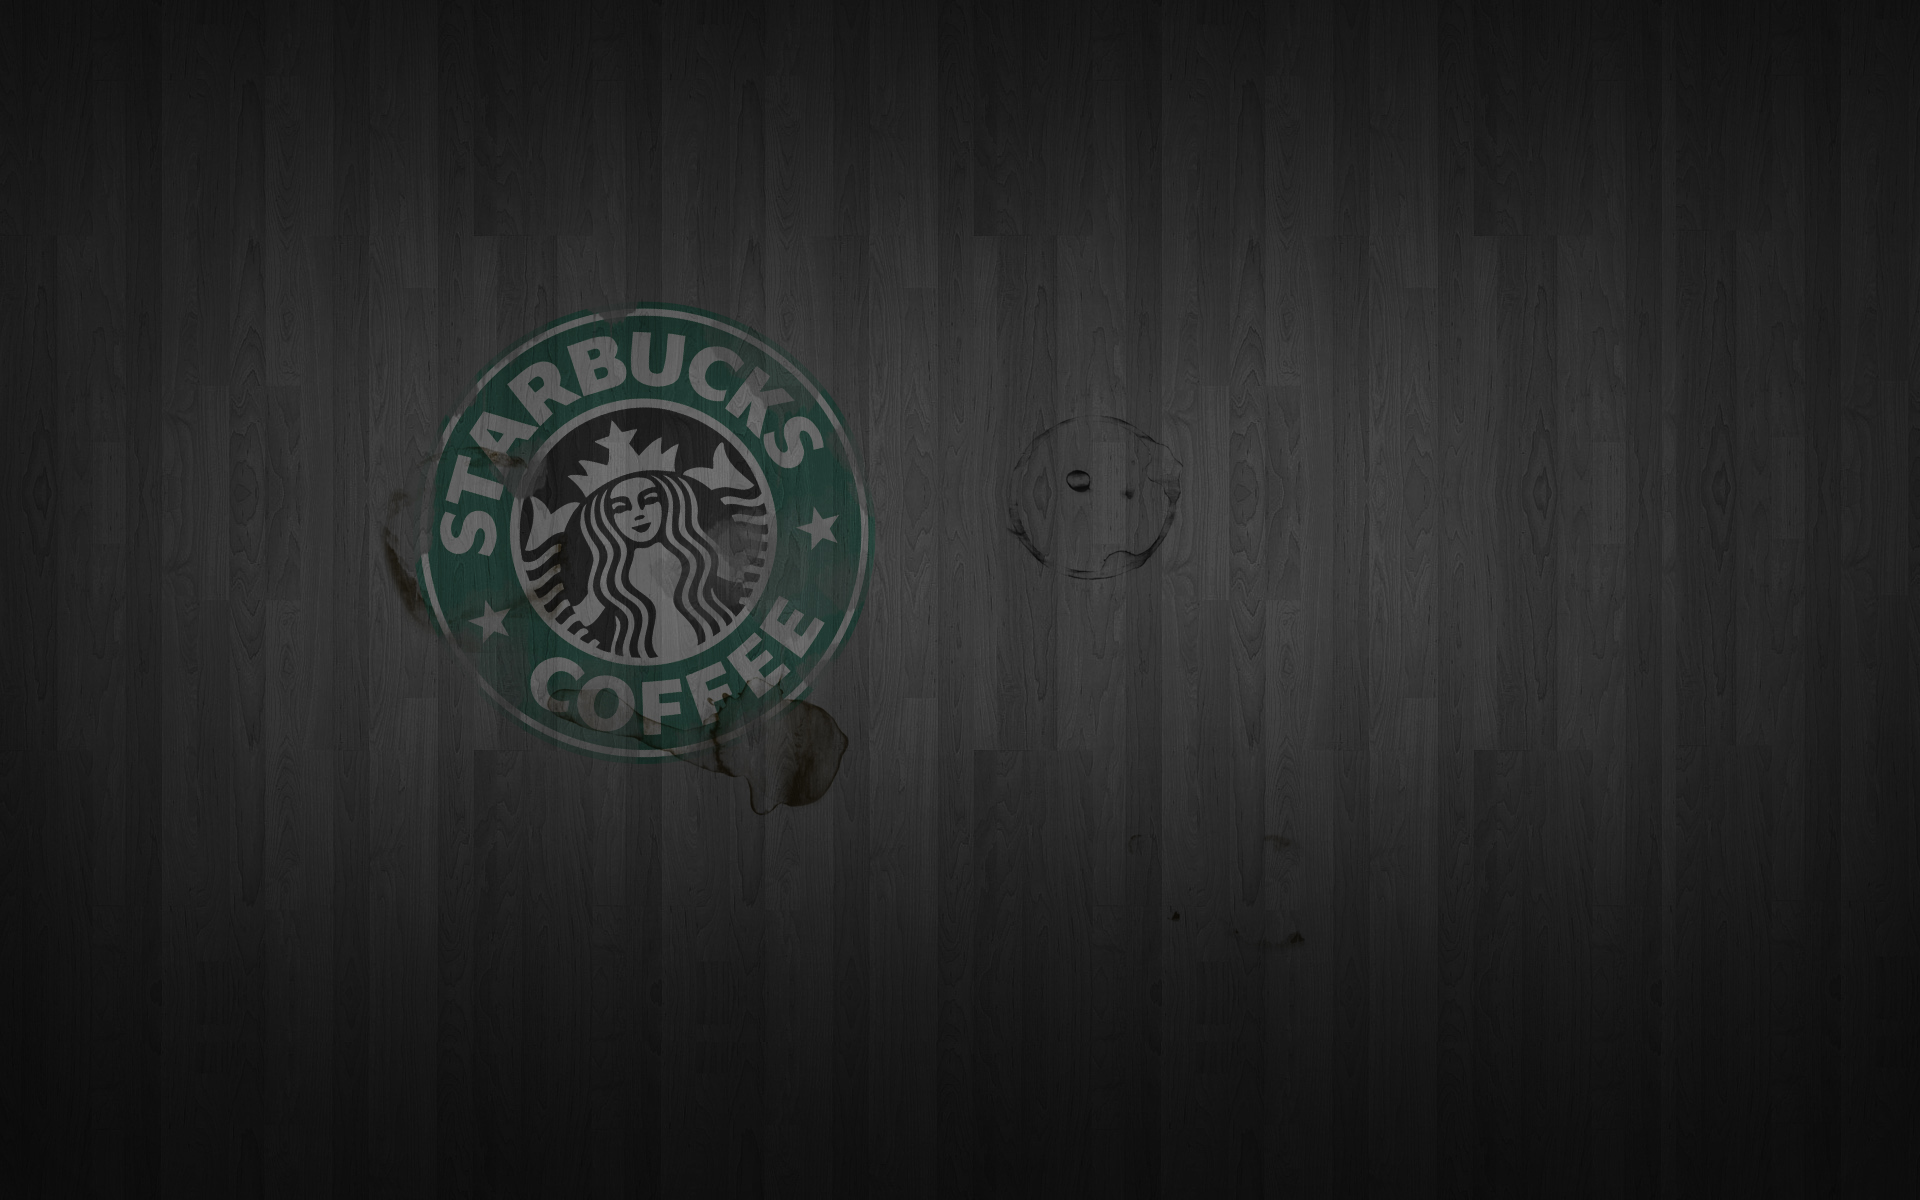 Starbucks Art Backgrounds for Powerpoint Templates - PPT Backgrounds With Regard To Starbucks Powerpoint Template